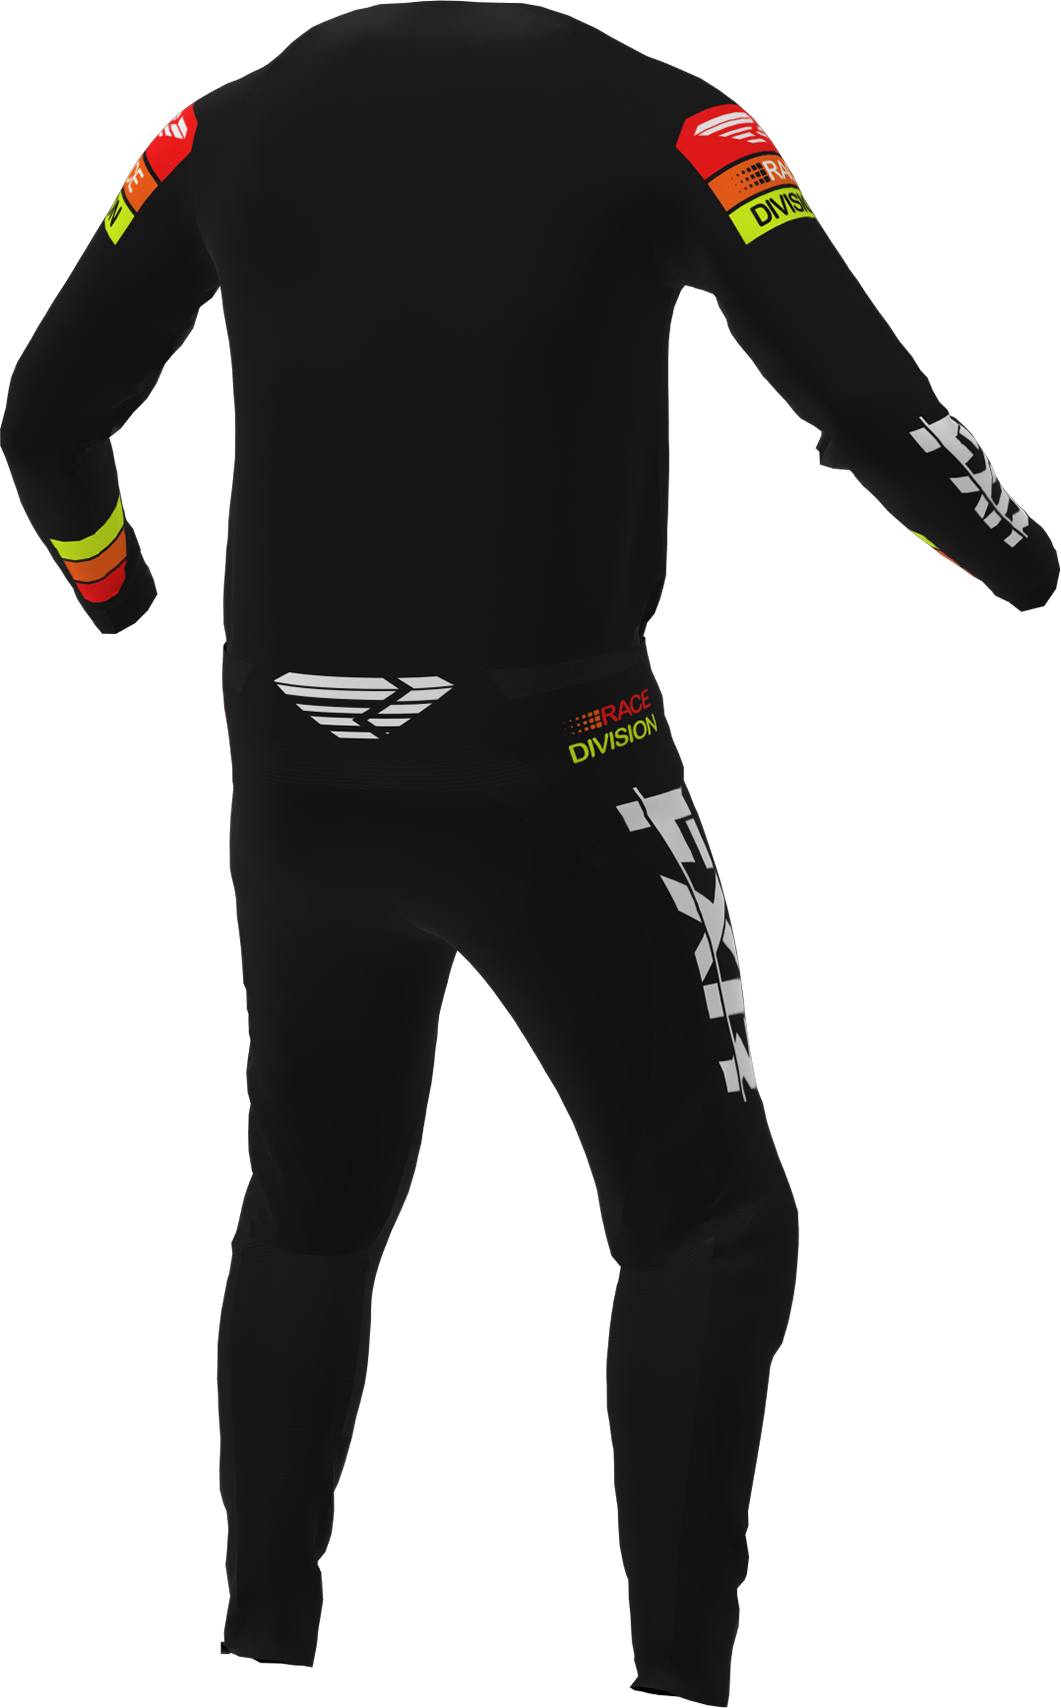 A 3D image of FXR's Clutch MX Jersey and Pant in Black/Orange/Hi-Vis colorway